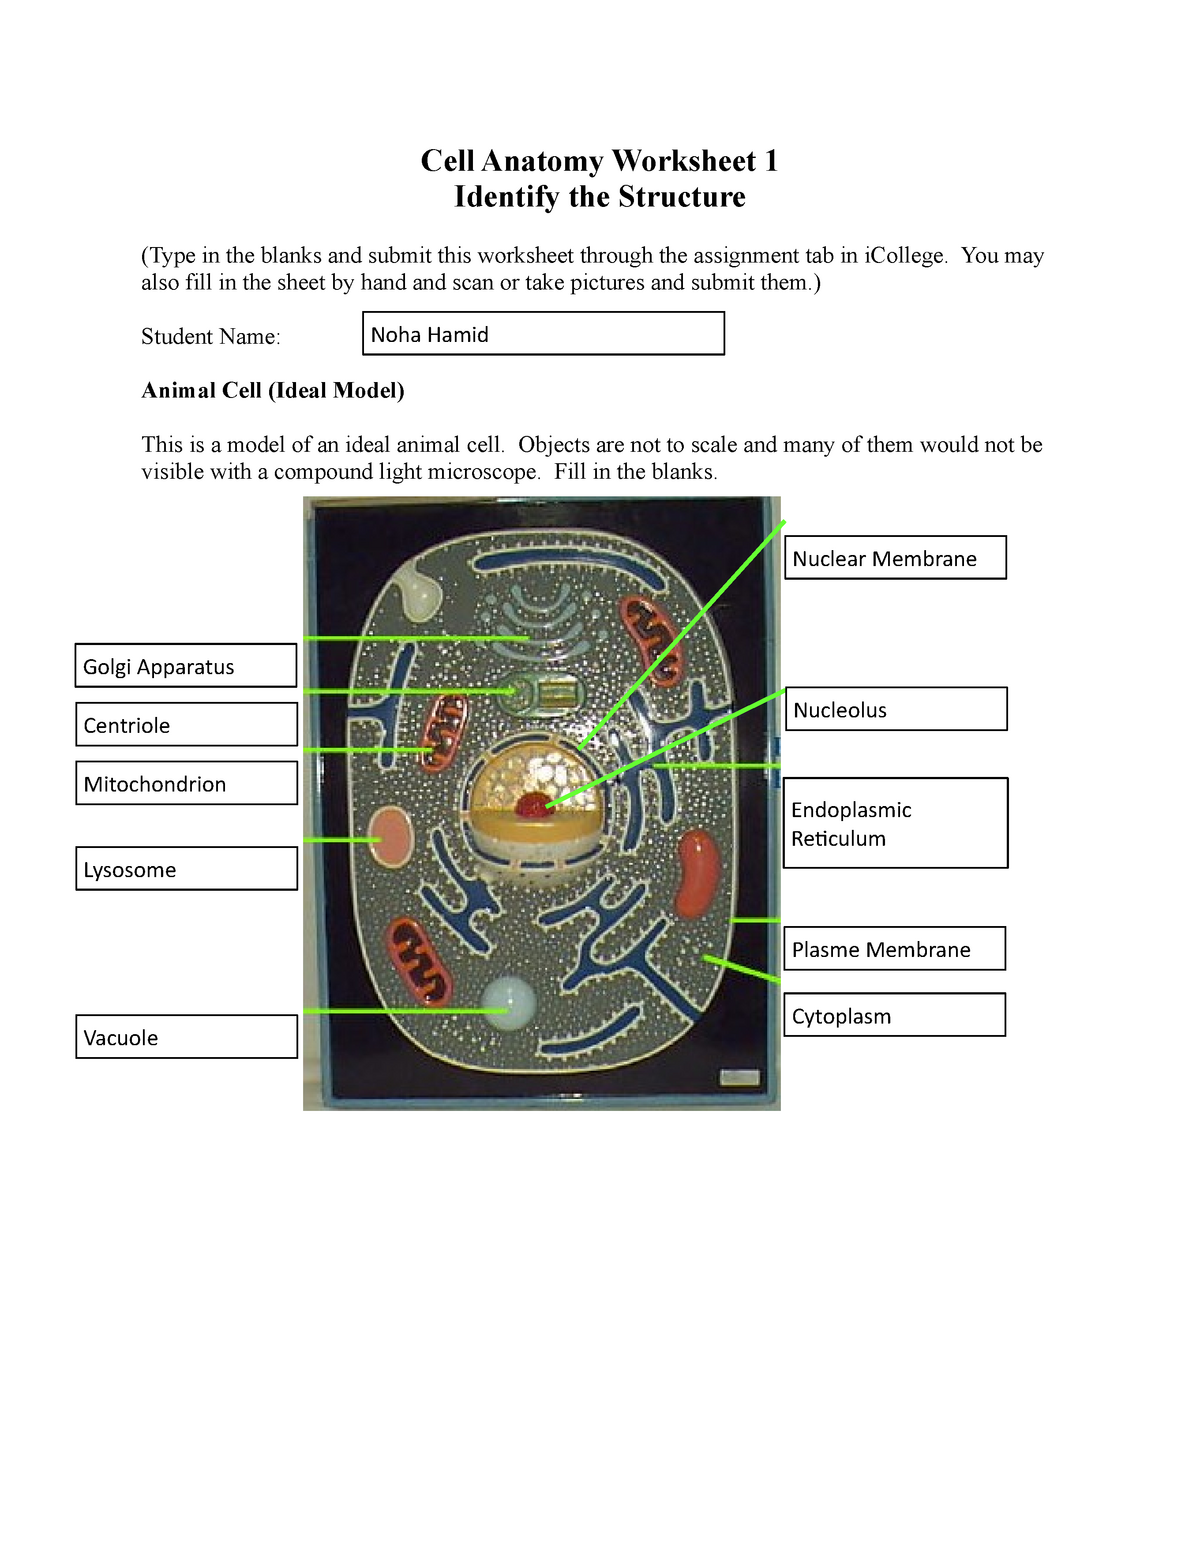 Cell Anatomy Worksheet 1 - BIOL 1103: Introduction to Biology - StuDocu